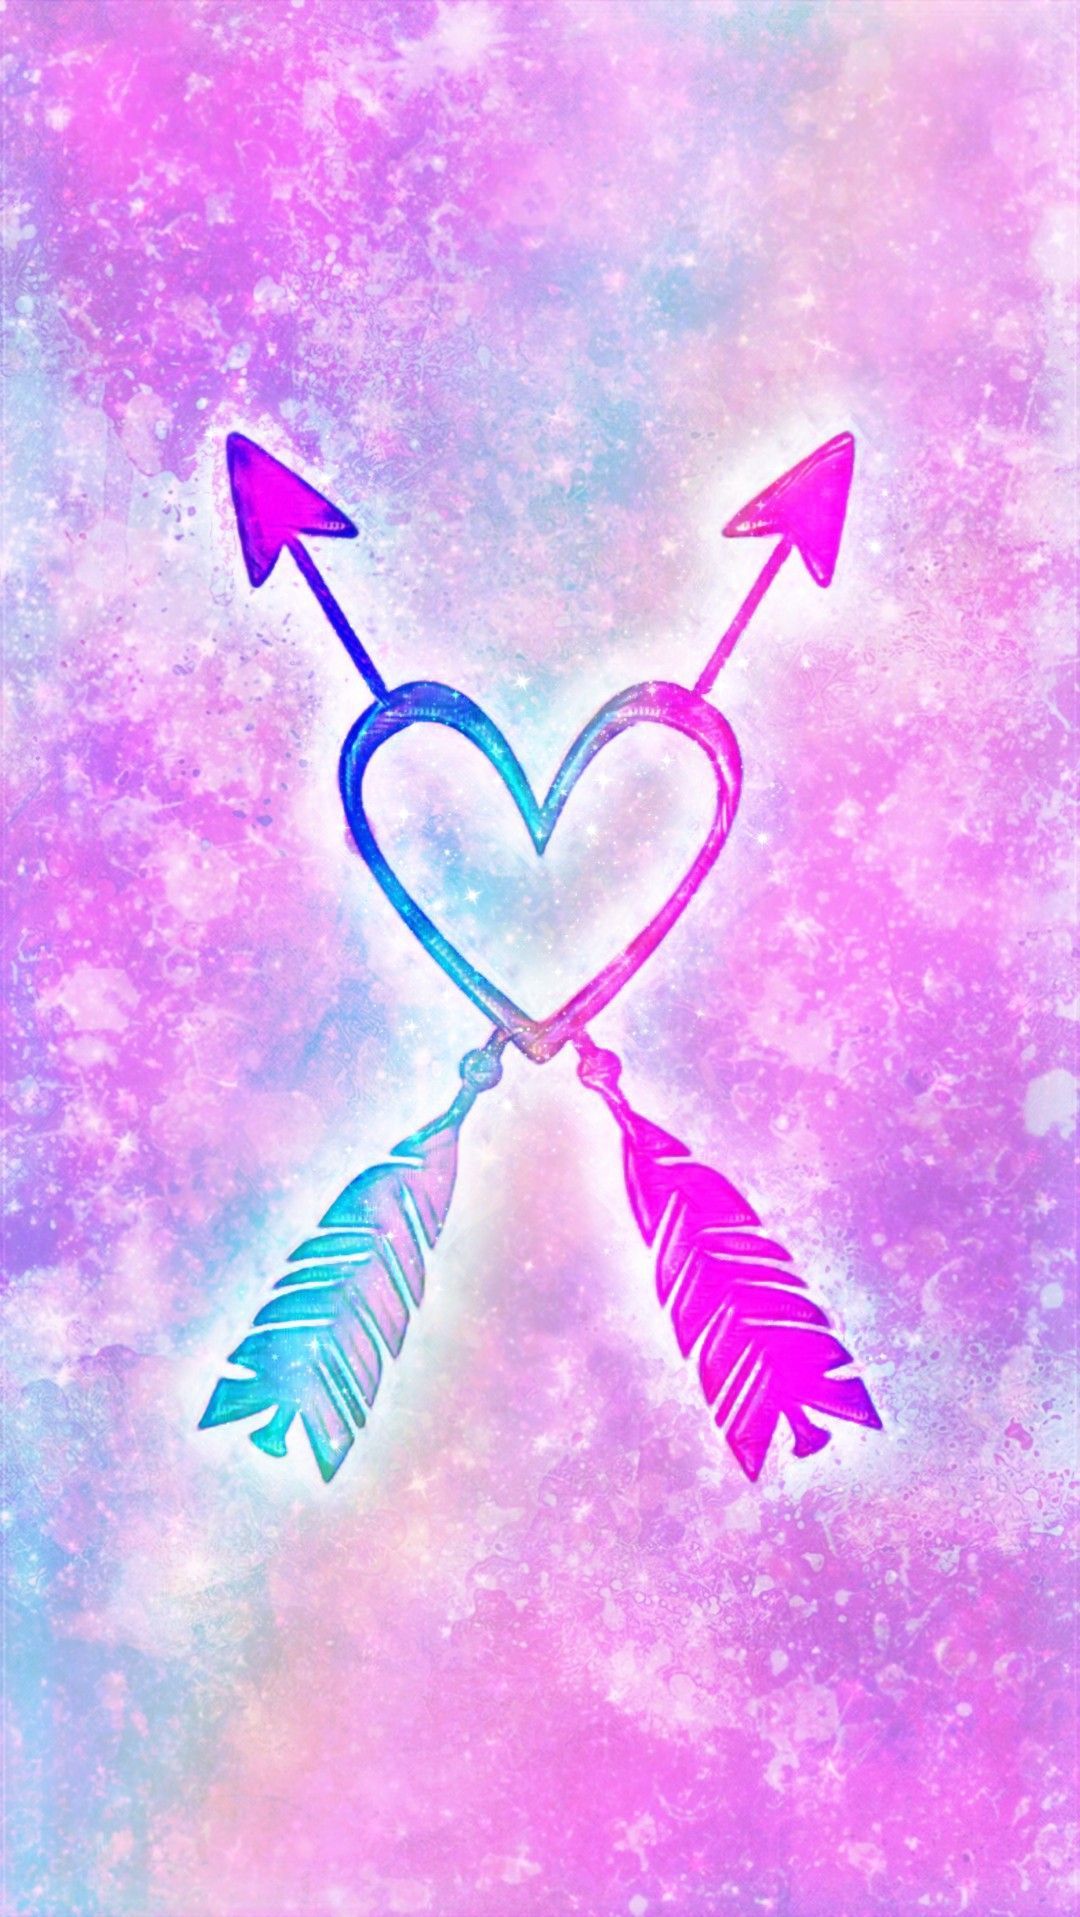 Arrow Heart Galaxy, made by me #arrows #hearts #love #pastel #background #glitter. Galaxy wallpaper iphone, Galaxy wallpaper, Galaxy wallpaper iphone background